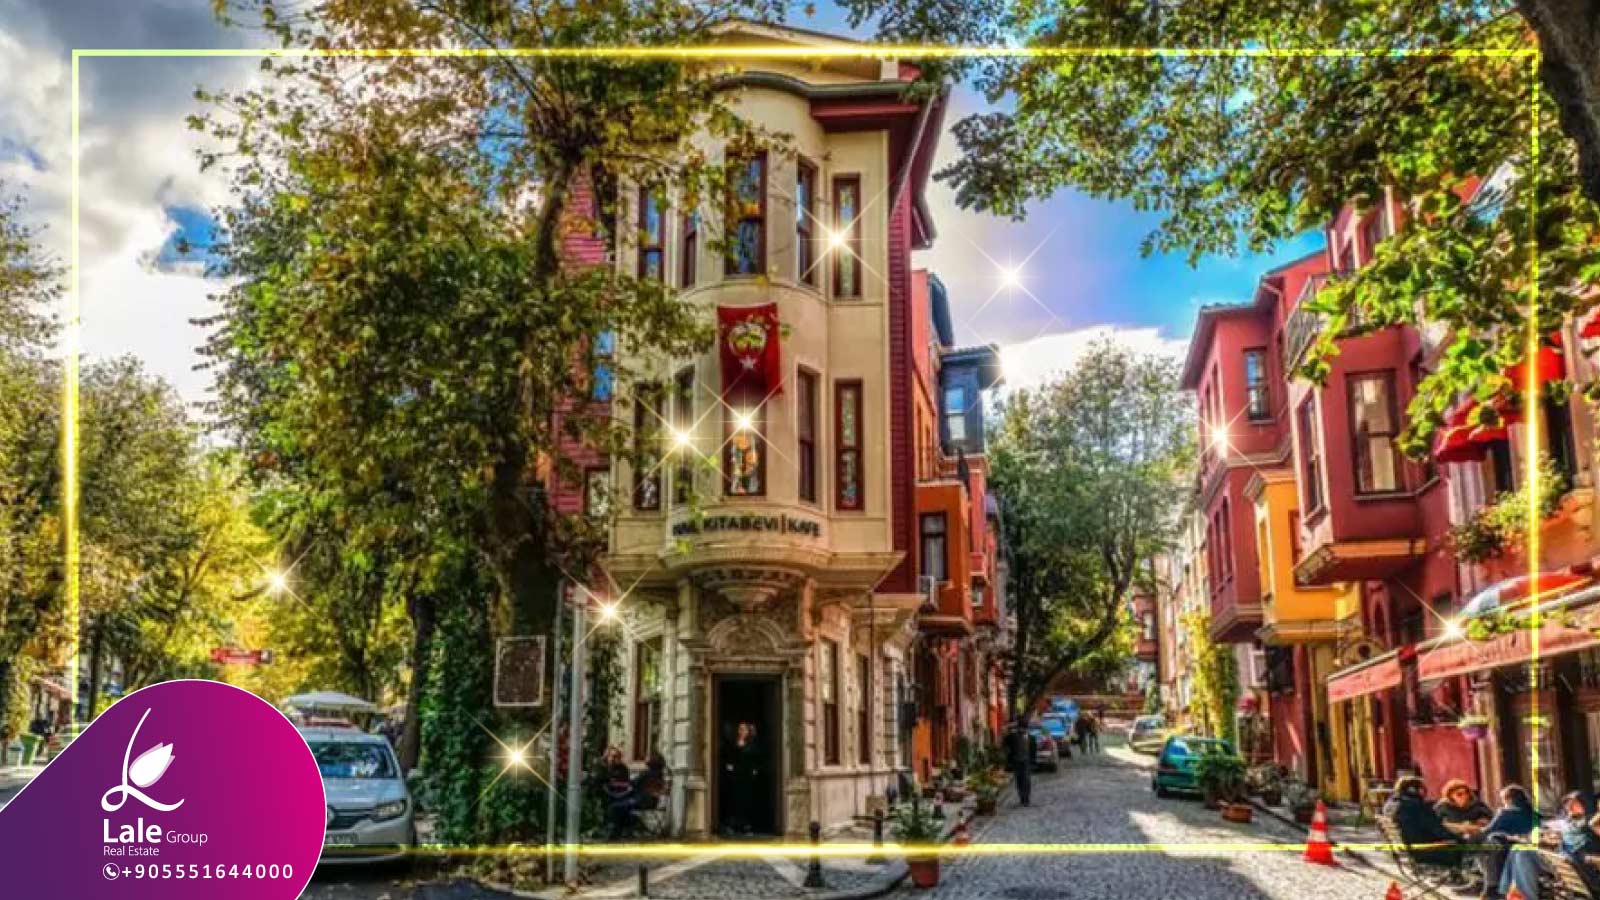 Nisantasi in Istanbul: Posh Neighborhood With Cool Things to Do